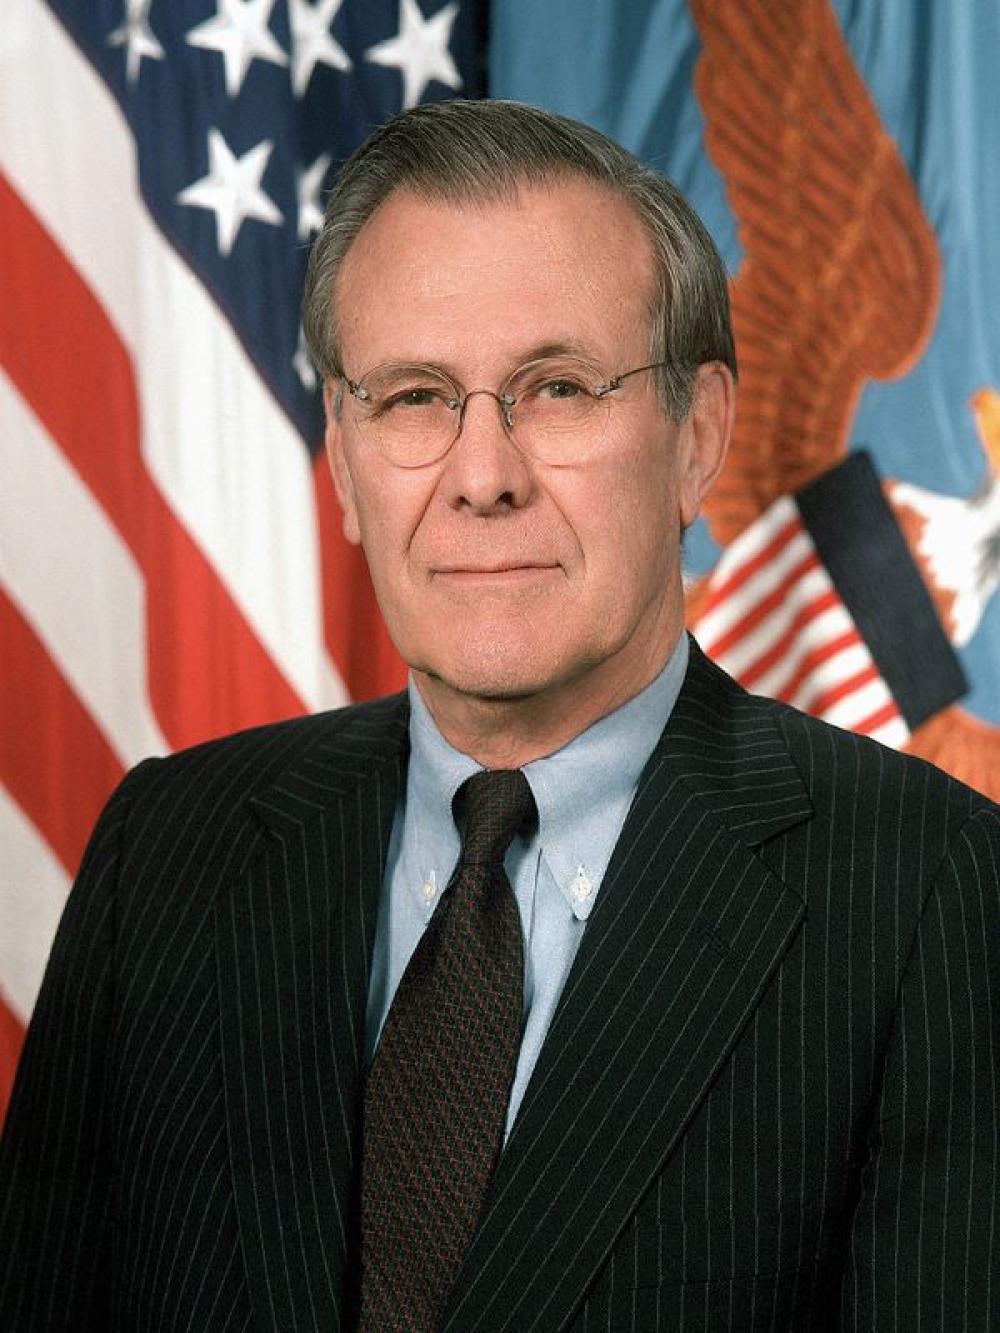 Donald Rumsfeld: Two-time US Defense Secretary who led America's War on Terror dies at 88